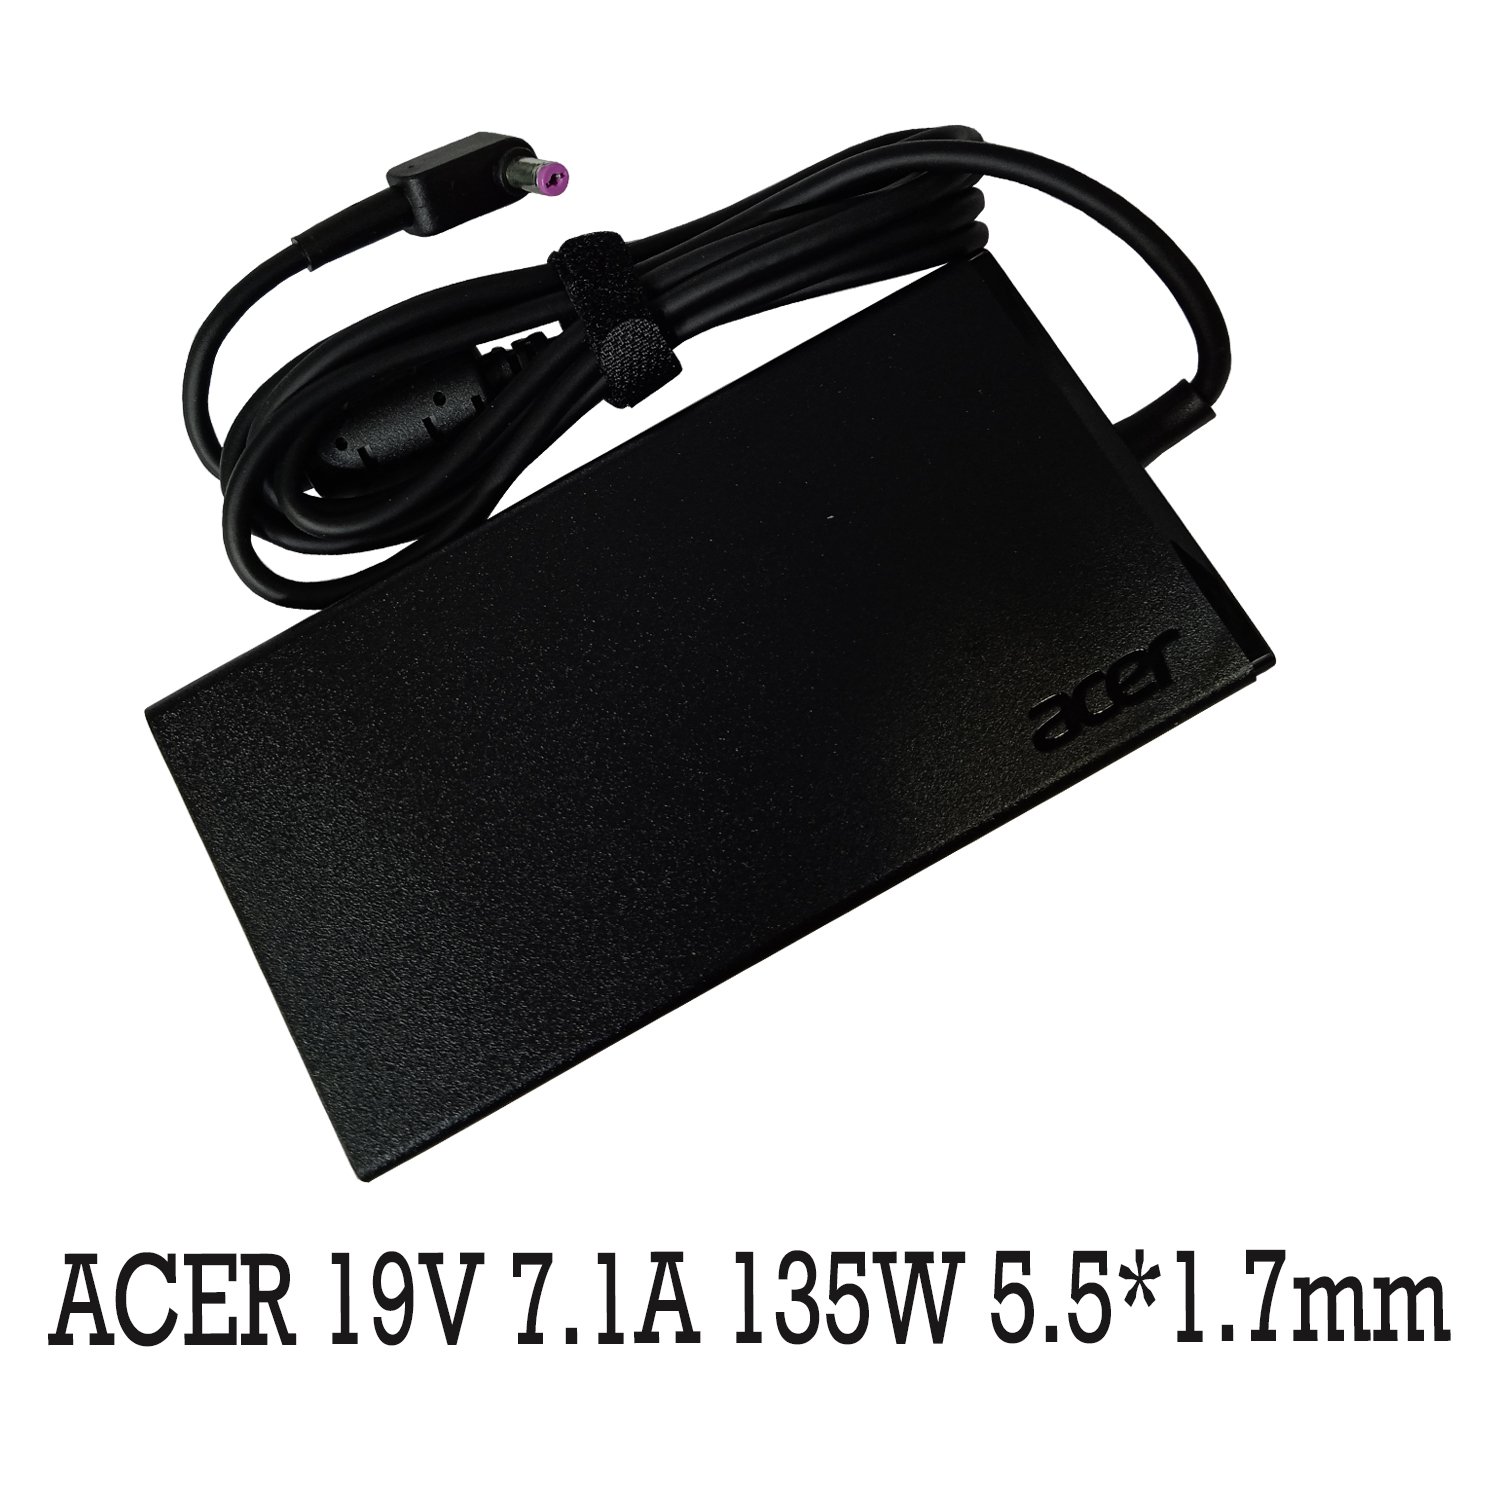 Acer 135W